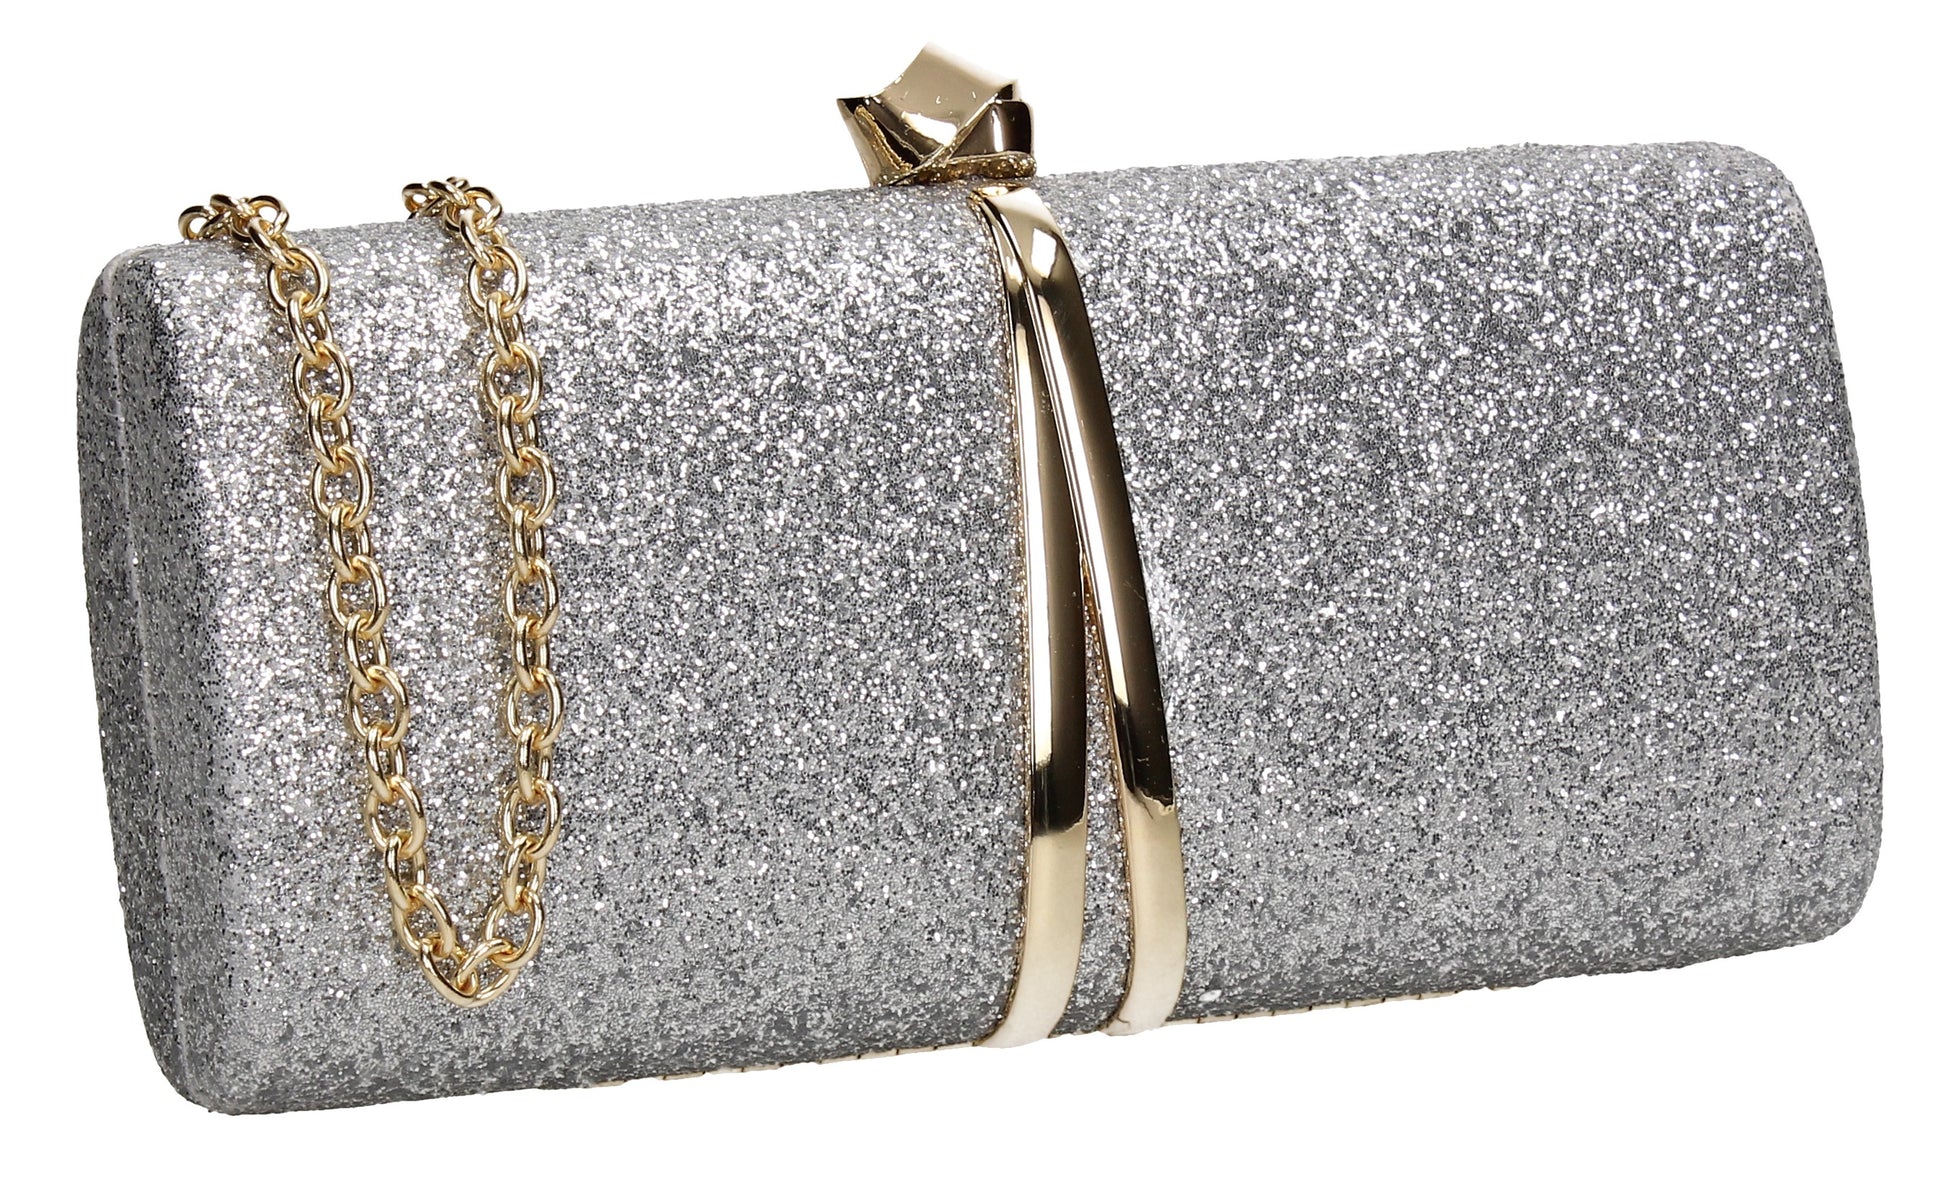 SWANKYSWANS Daisy Clutch Bag Silver Cute Cheap Clutch Bag For Weddings School and Work